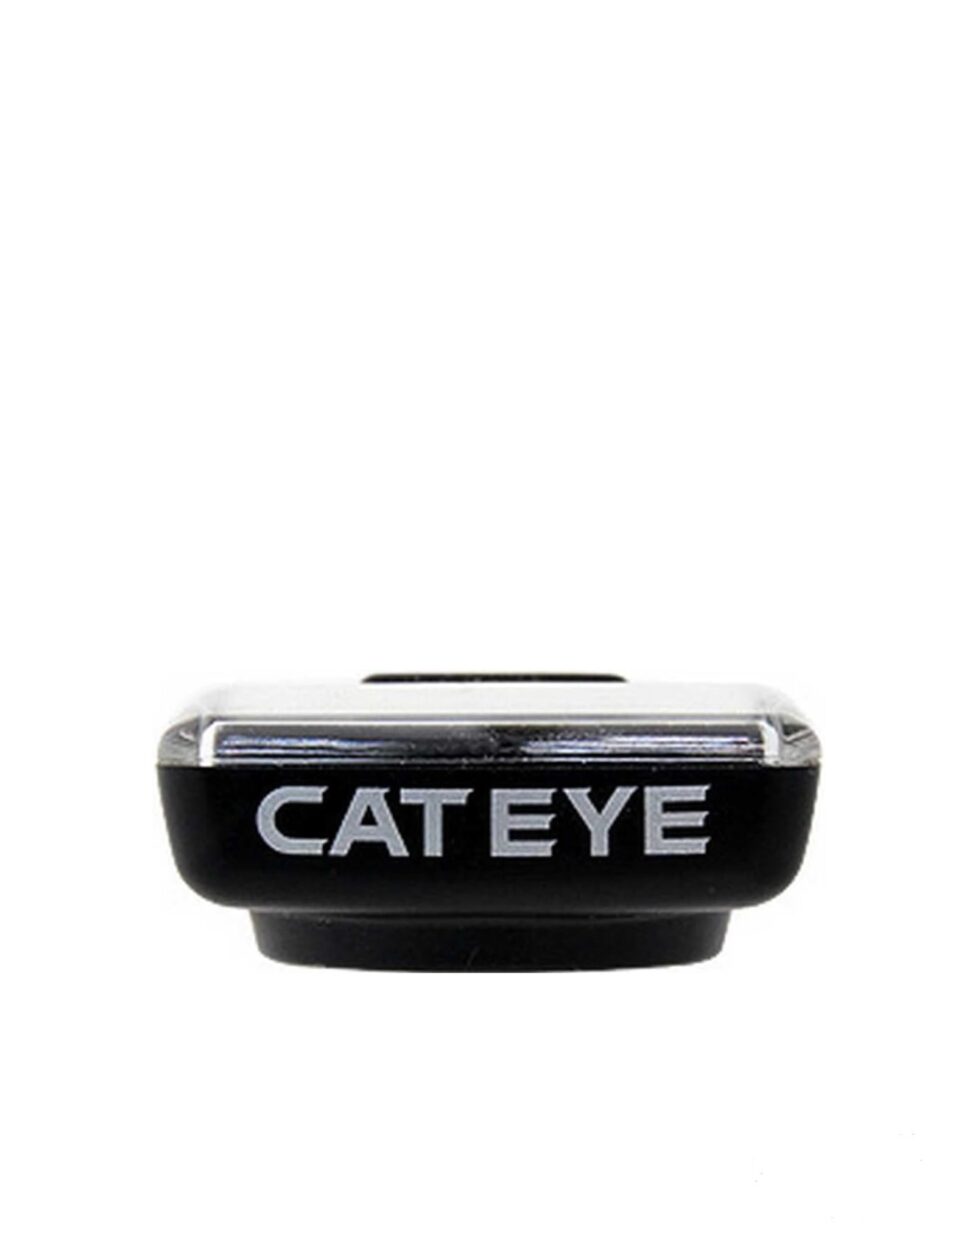 Cateye Velo Wireless Stealth Edition - Immagine 2